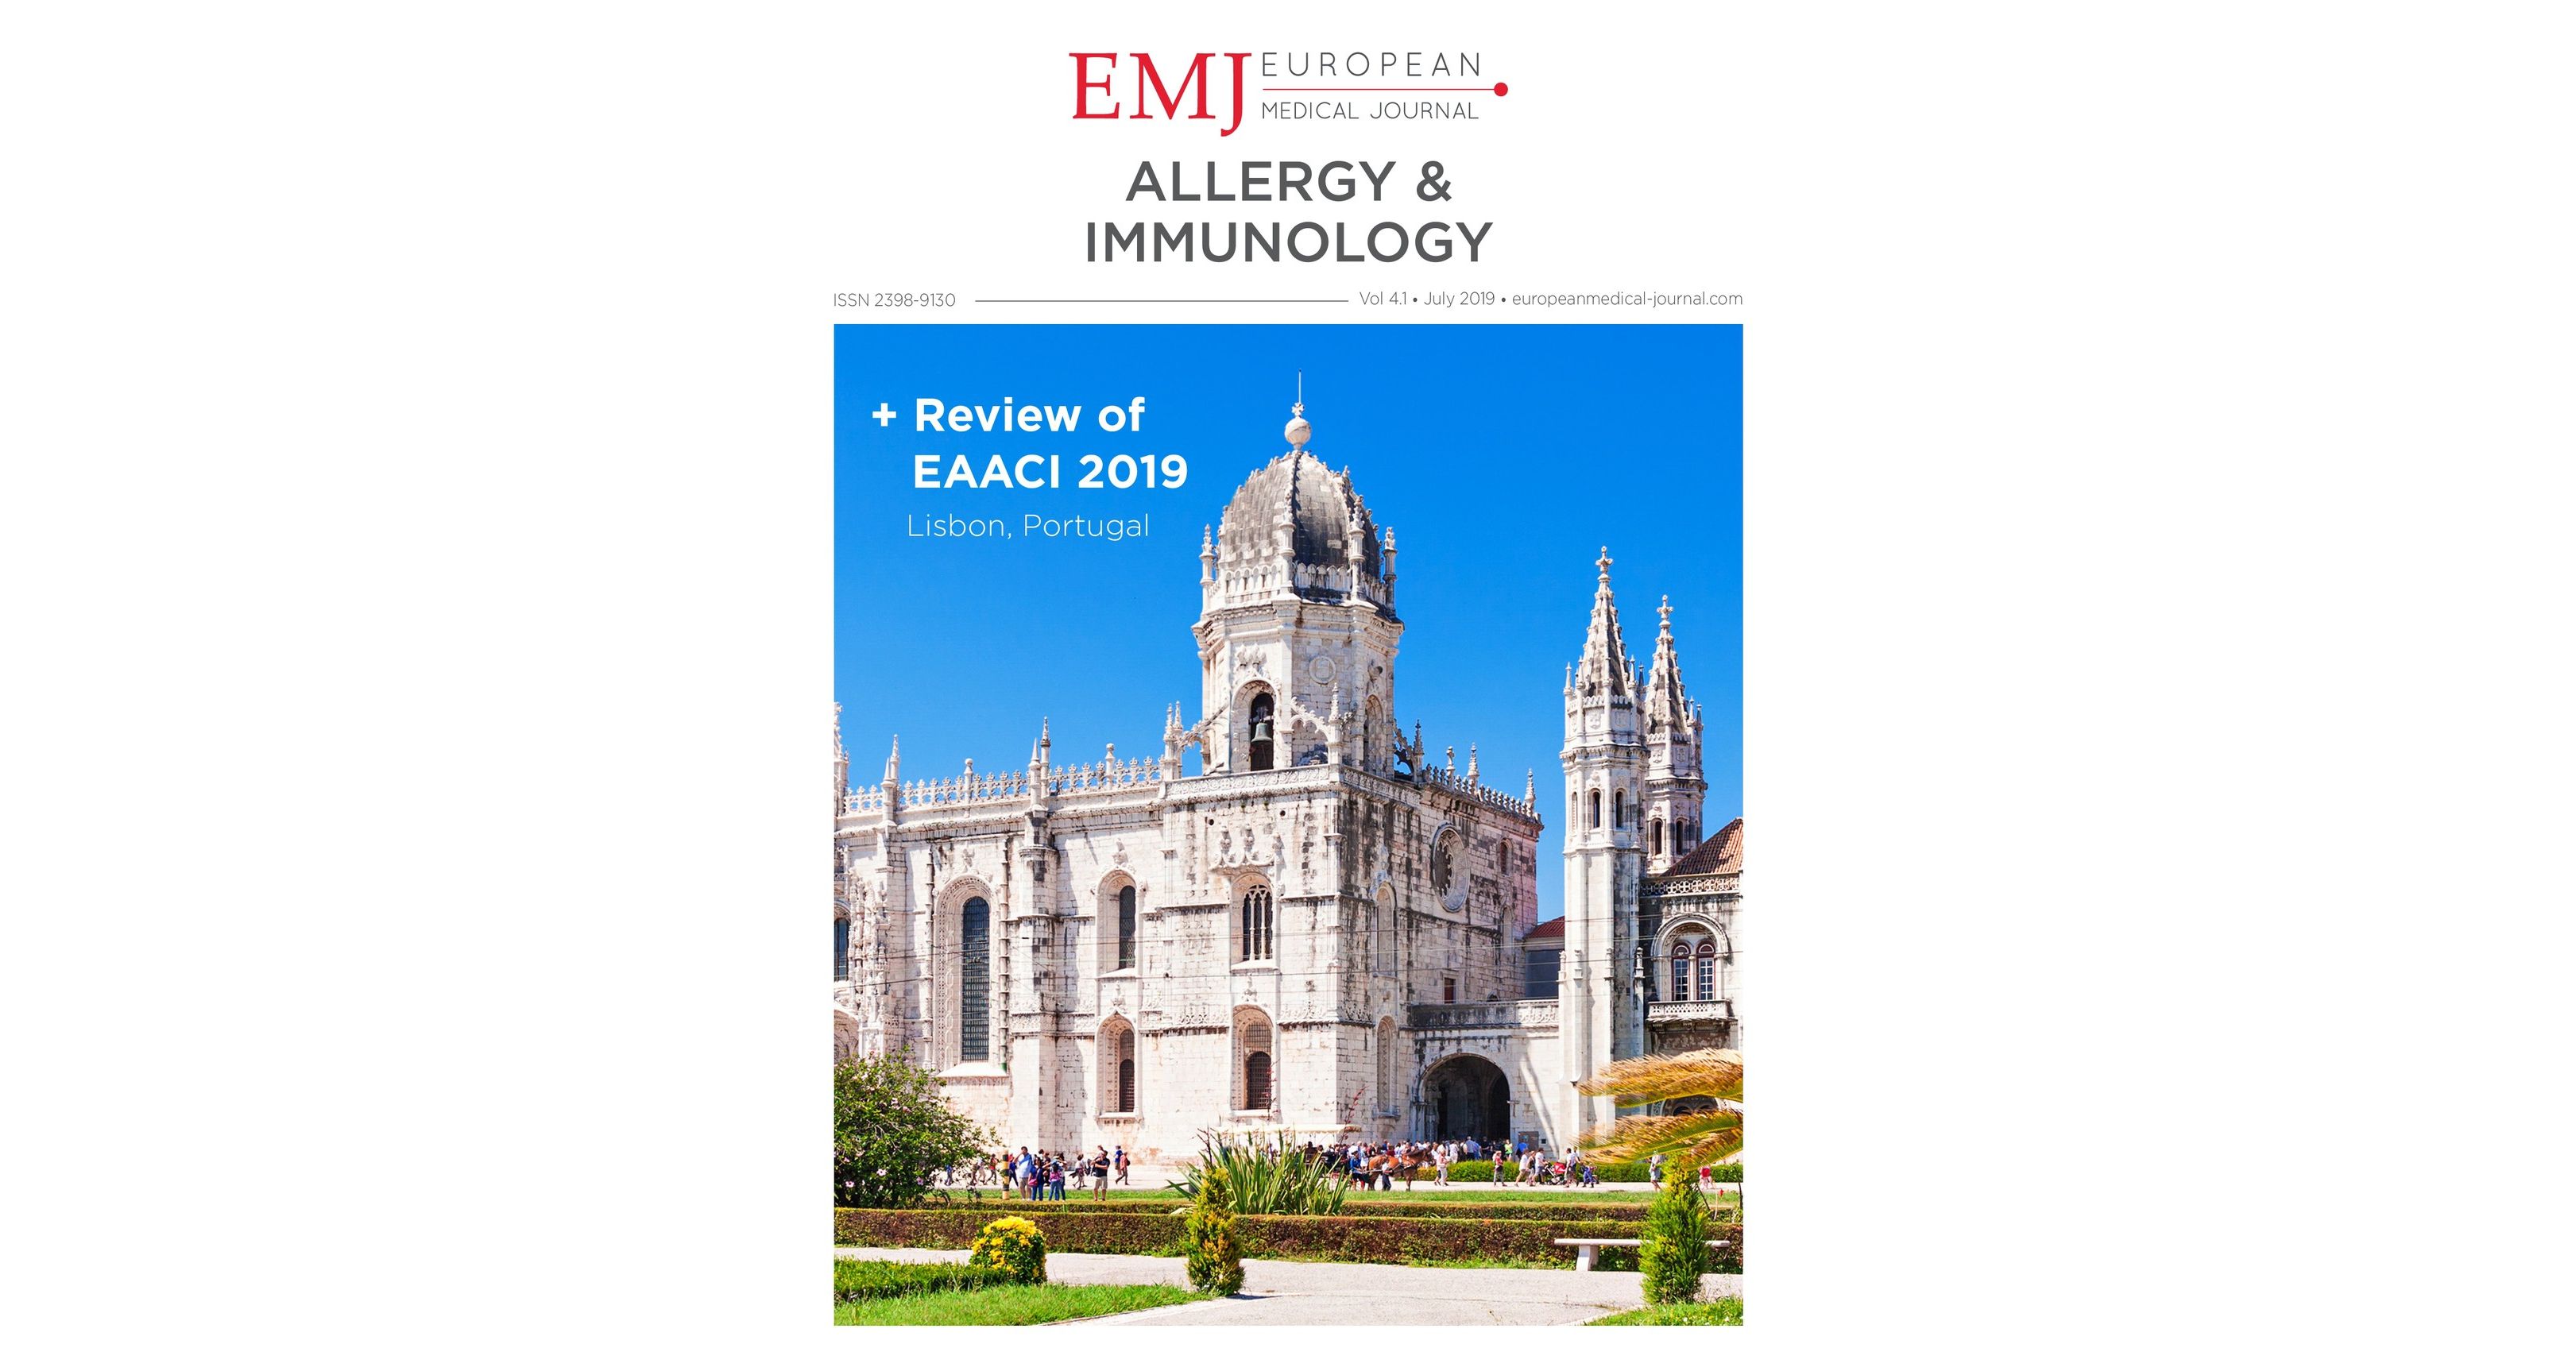 EMJ Allergy & Immunology 4.1 2019